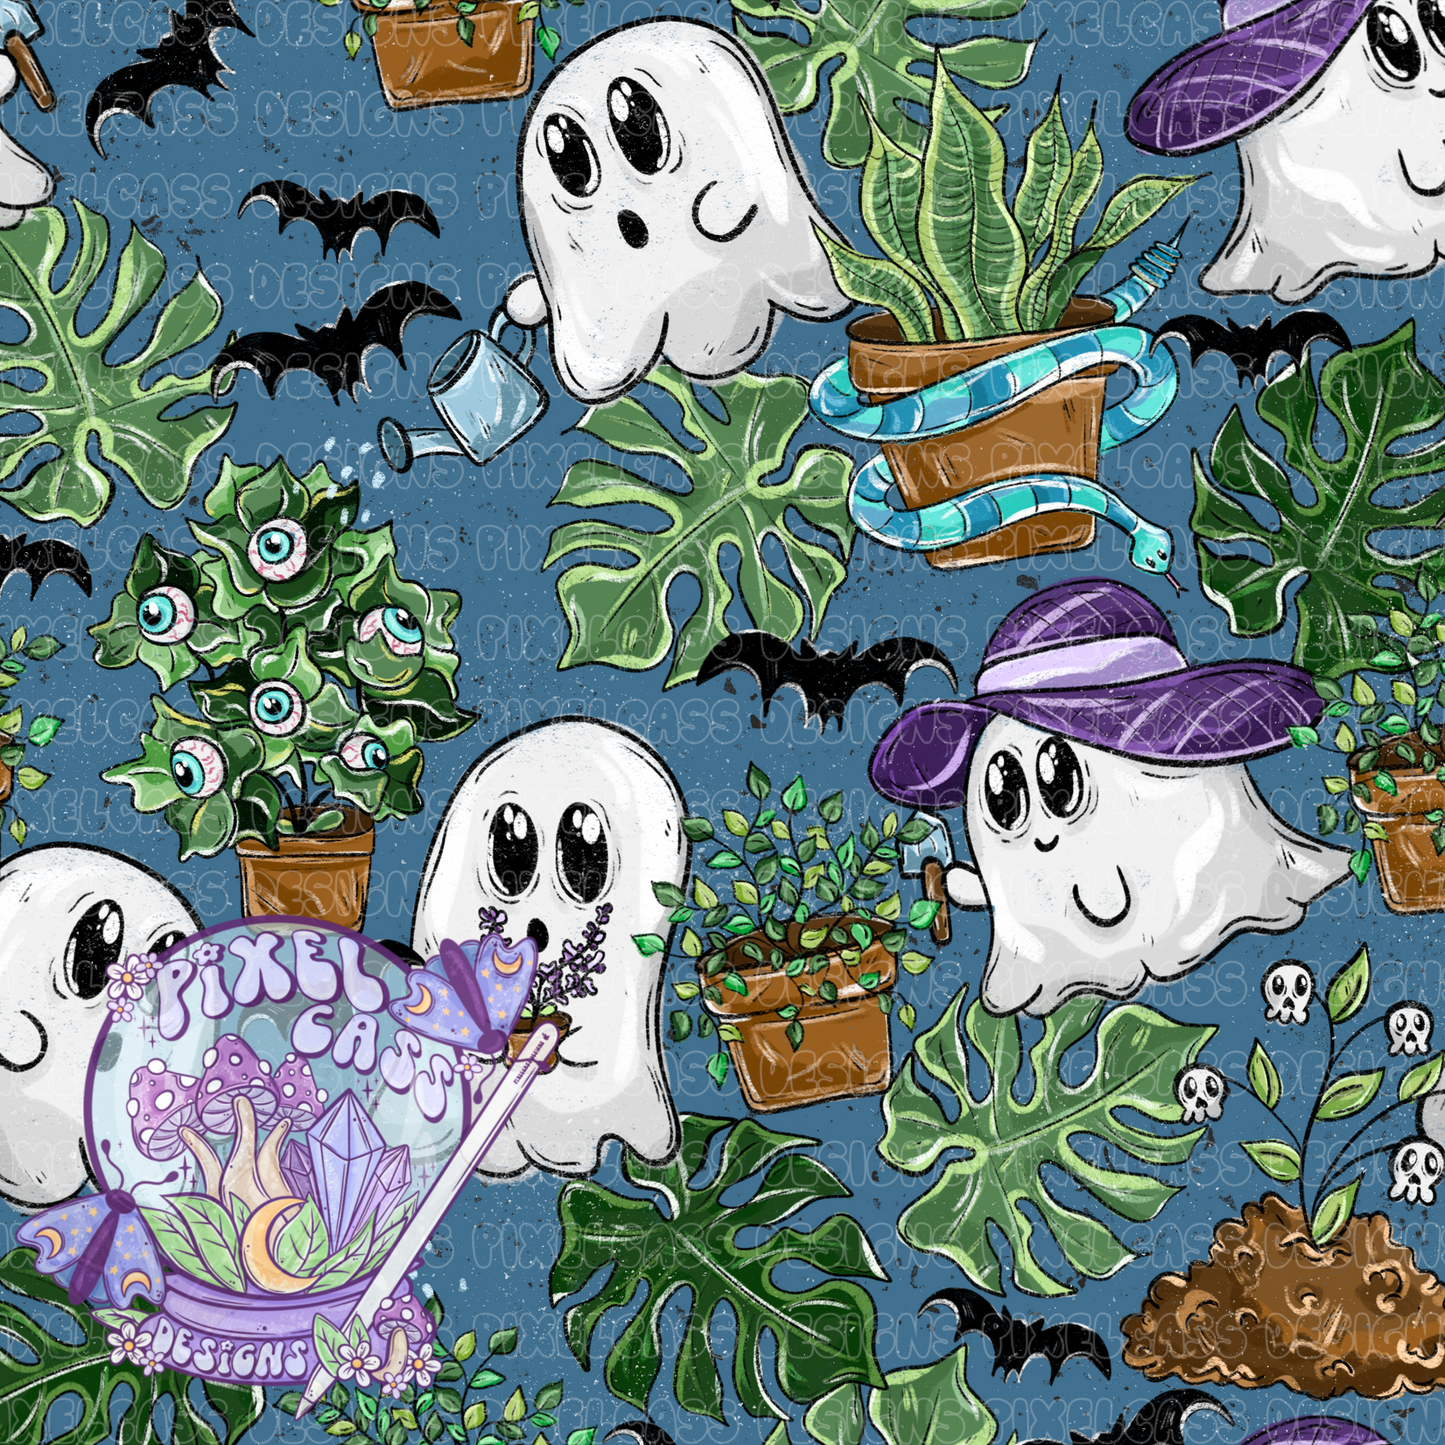 Ghost Plants